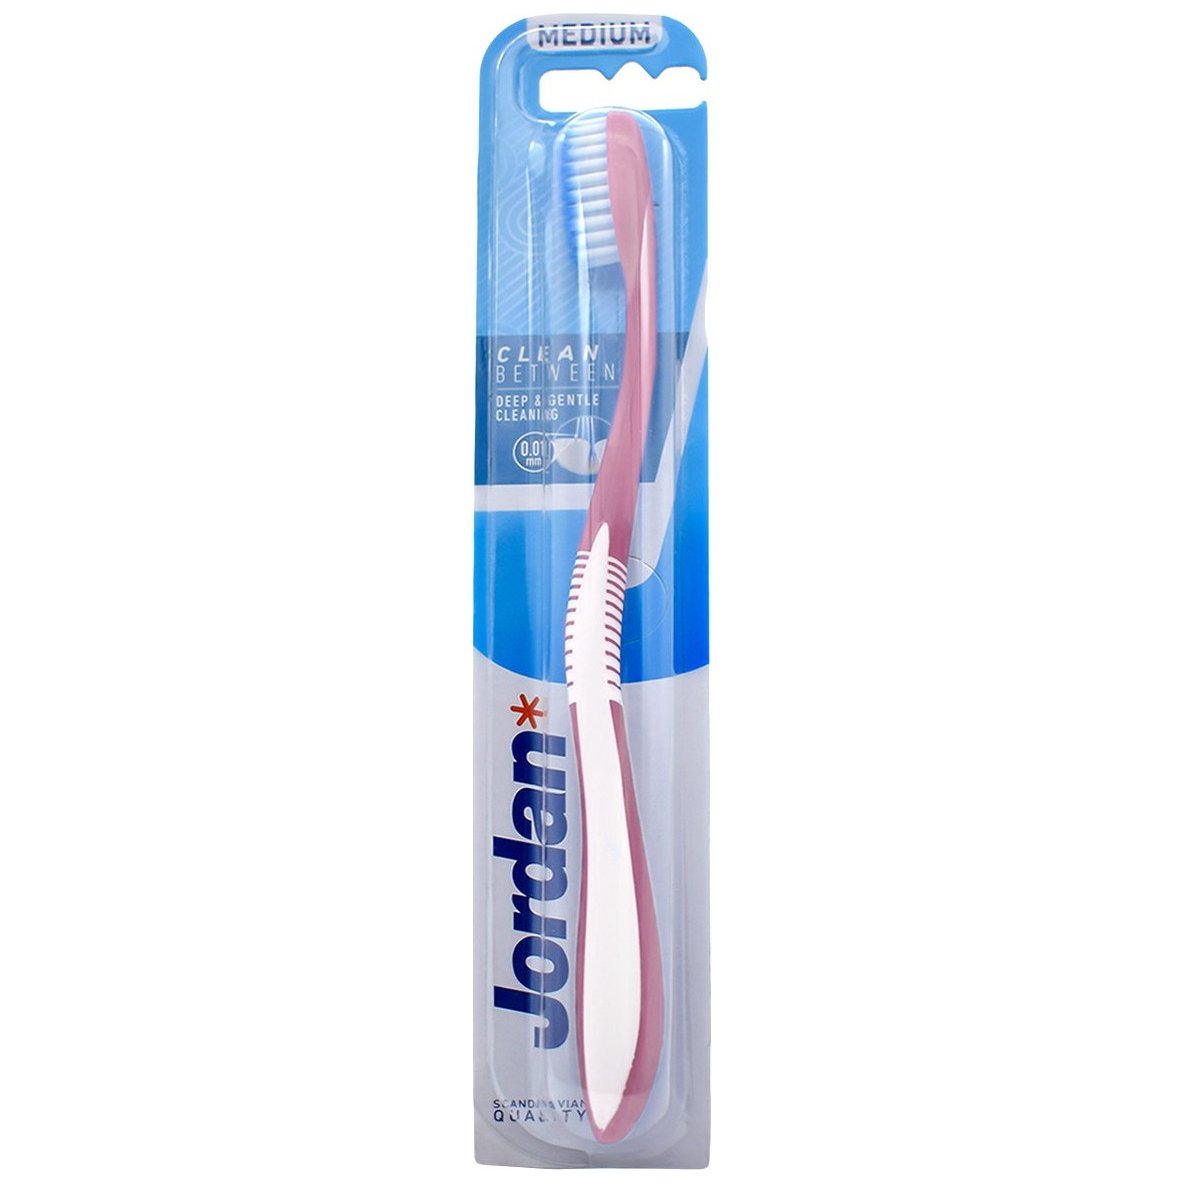 Jordan Clean Between Toothbrush Medium 0.01mm Μέτρια Οδοντόβουρτσα για Βαθύ Καθαρισμό με Εξαιρετικά Λεπτές Ίνες 1 Τεμάχιο, Κωδ 310035 – Ροζ